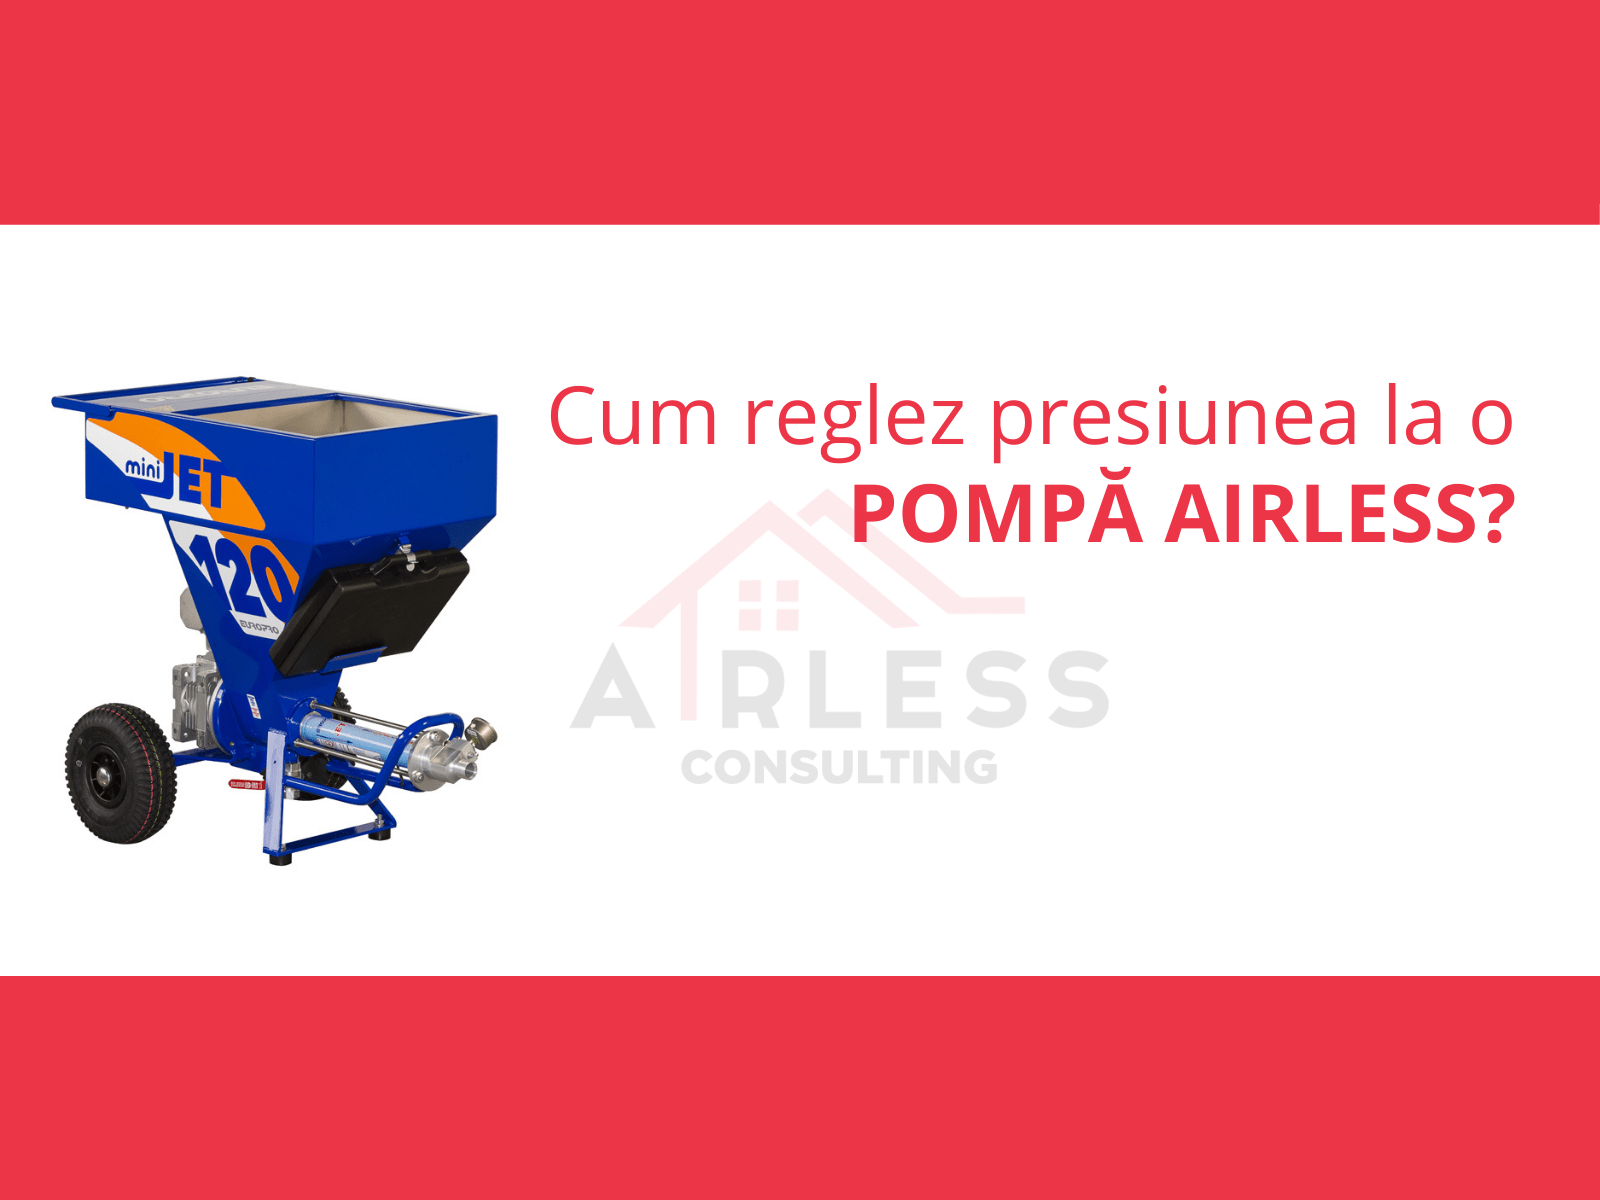 Cum reglezi presiunea la o pompa airless?